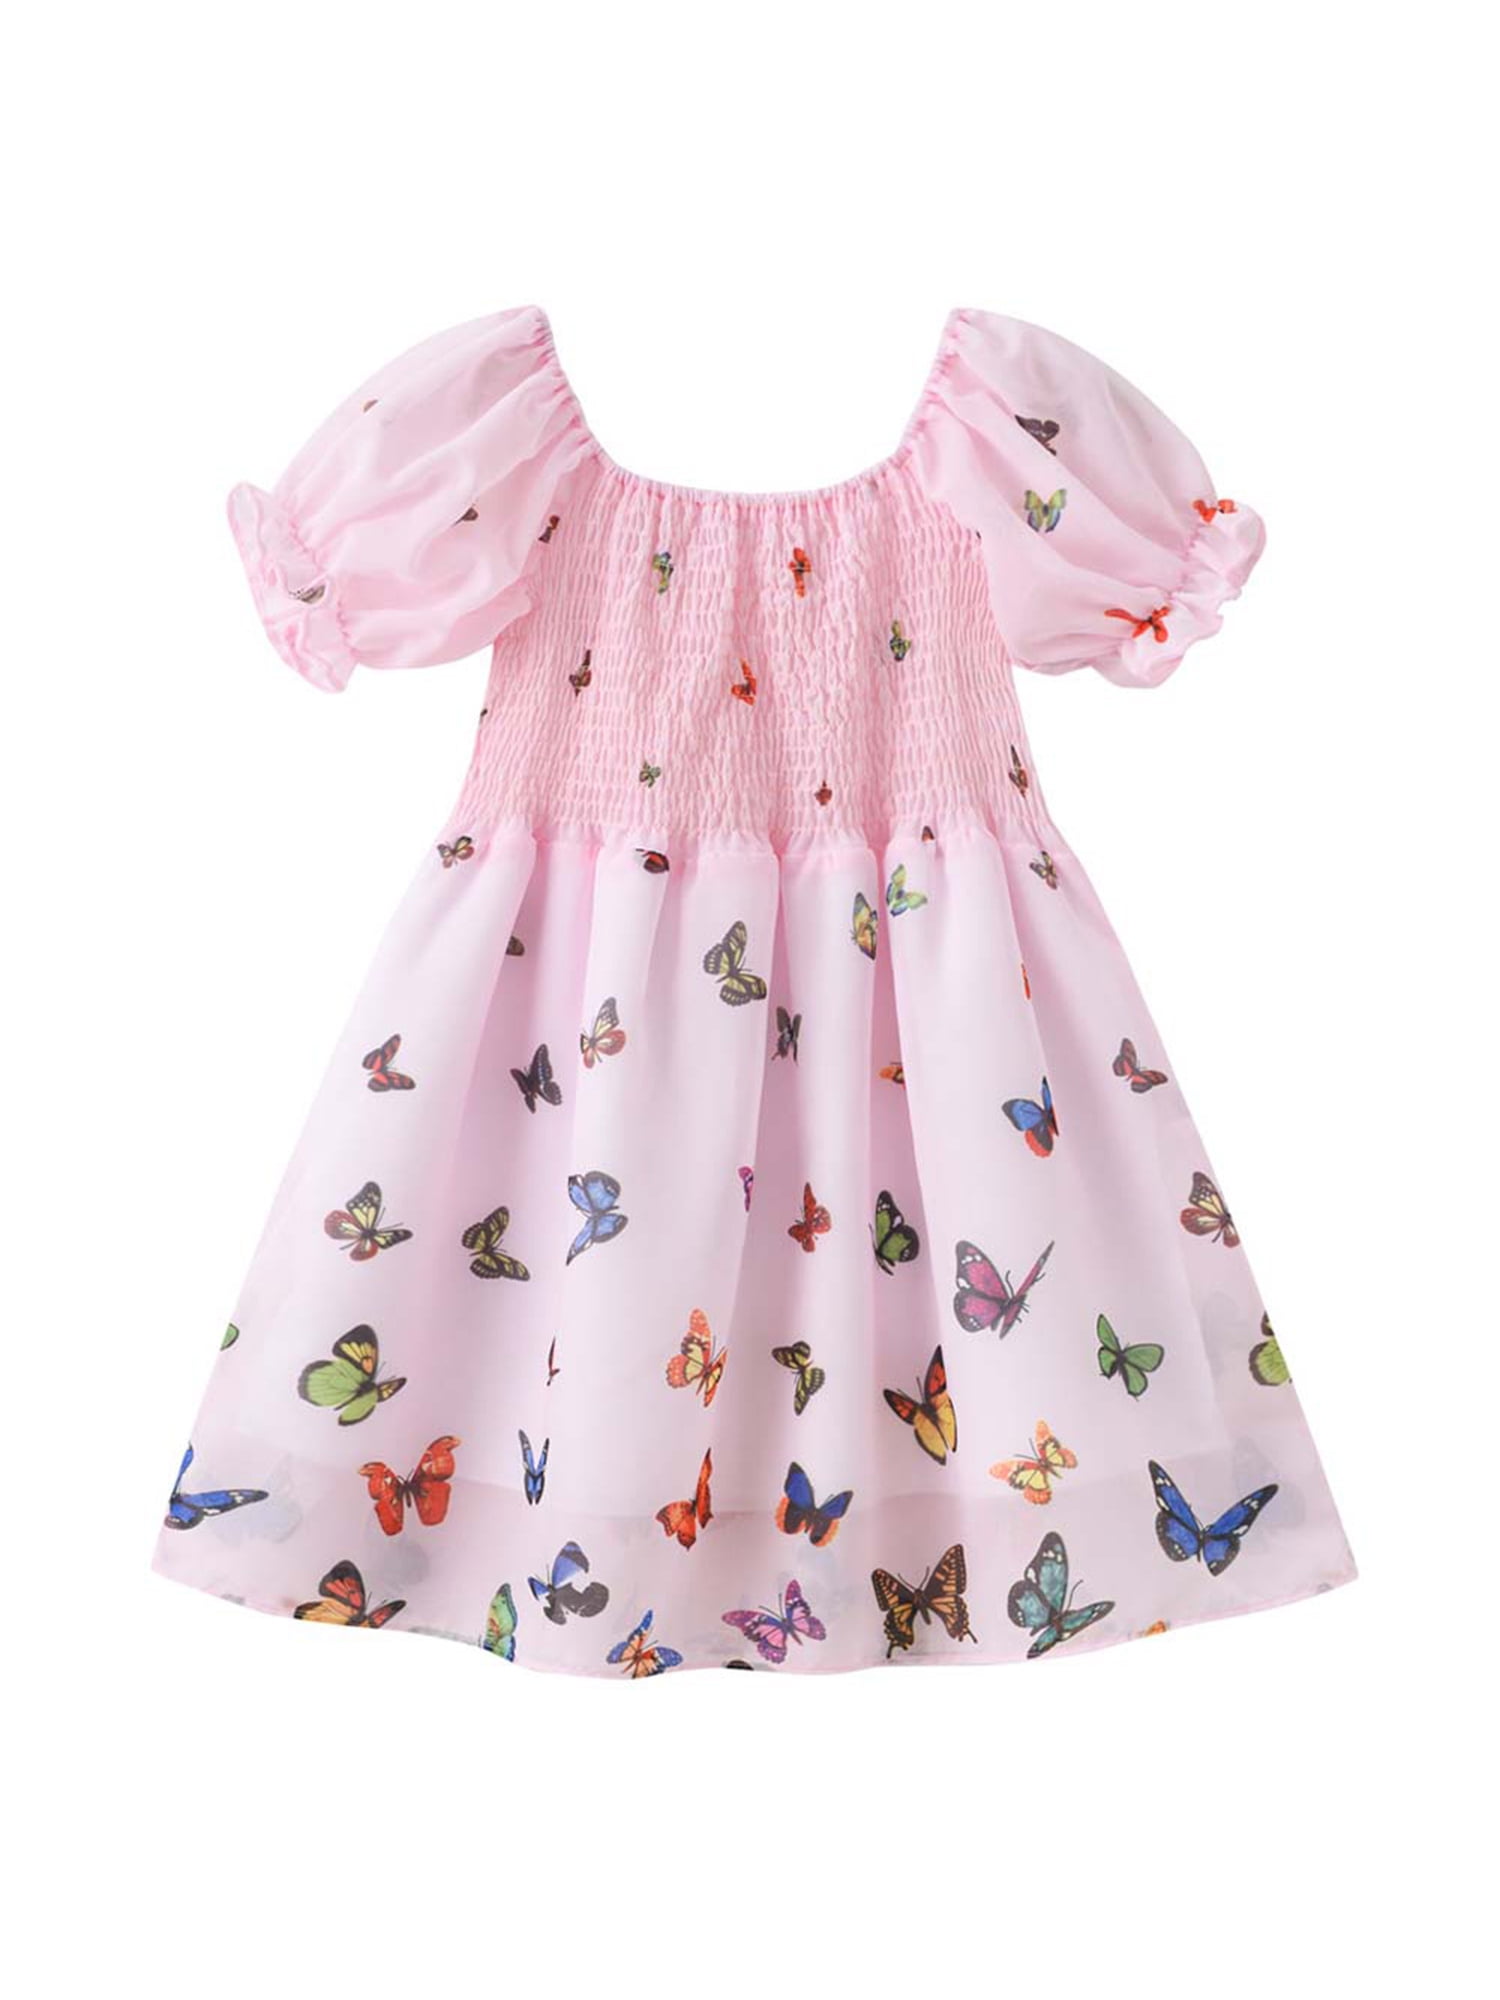 Kids Girls Butterfly Print Princess Dress Party Short Sleeve Casual ...